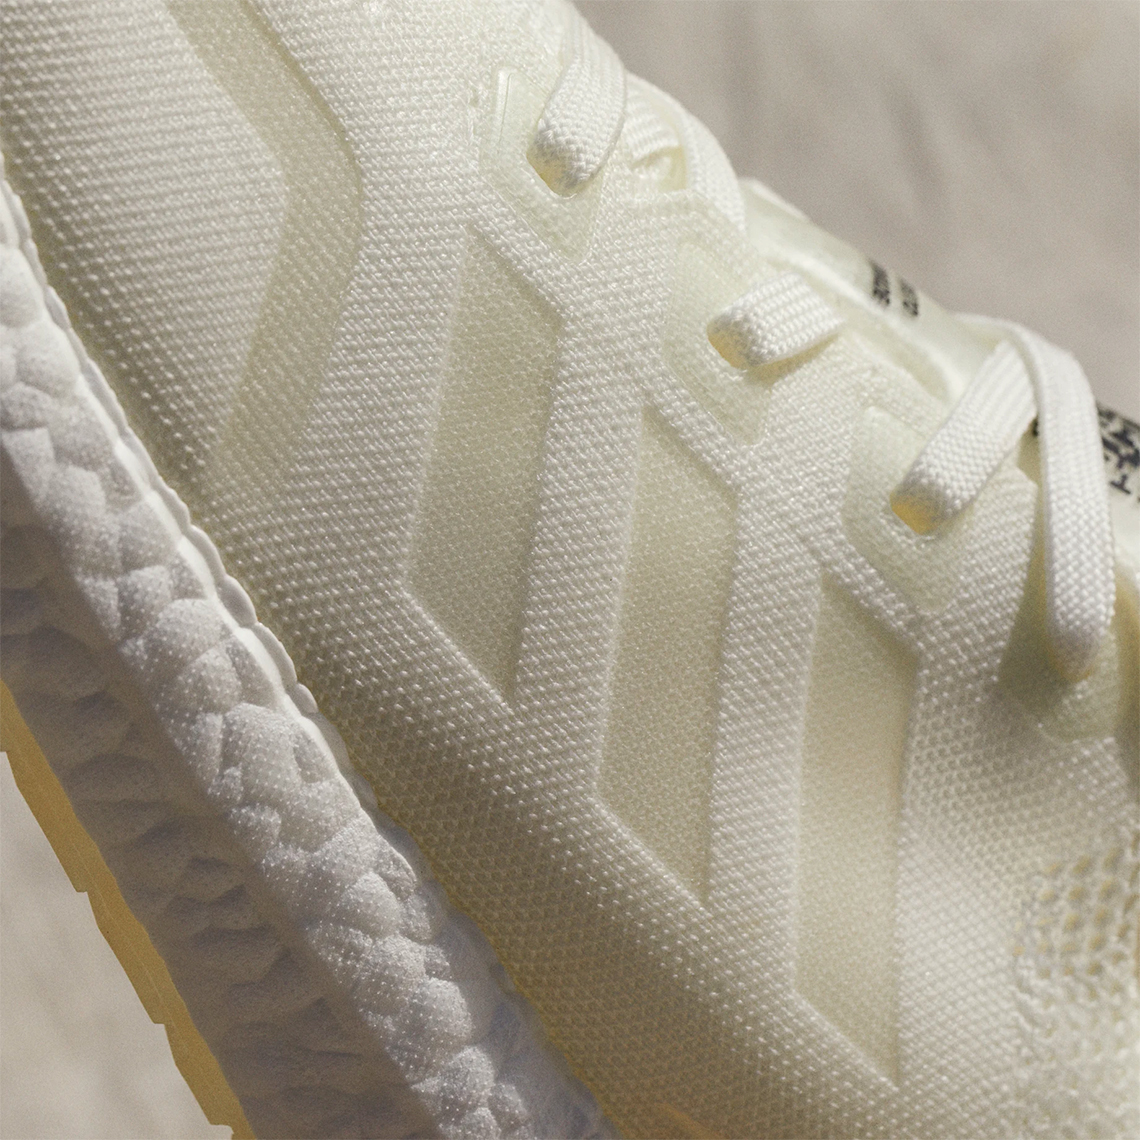 Adidas FUTURECRAFT "Made To Be Remade"